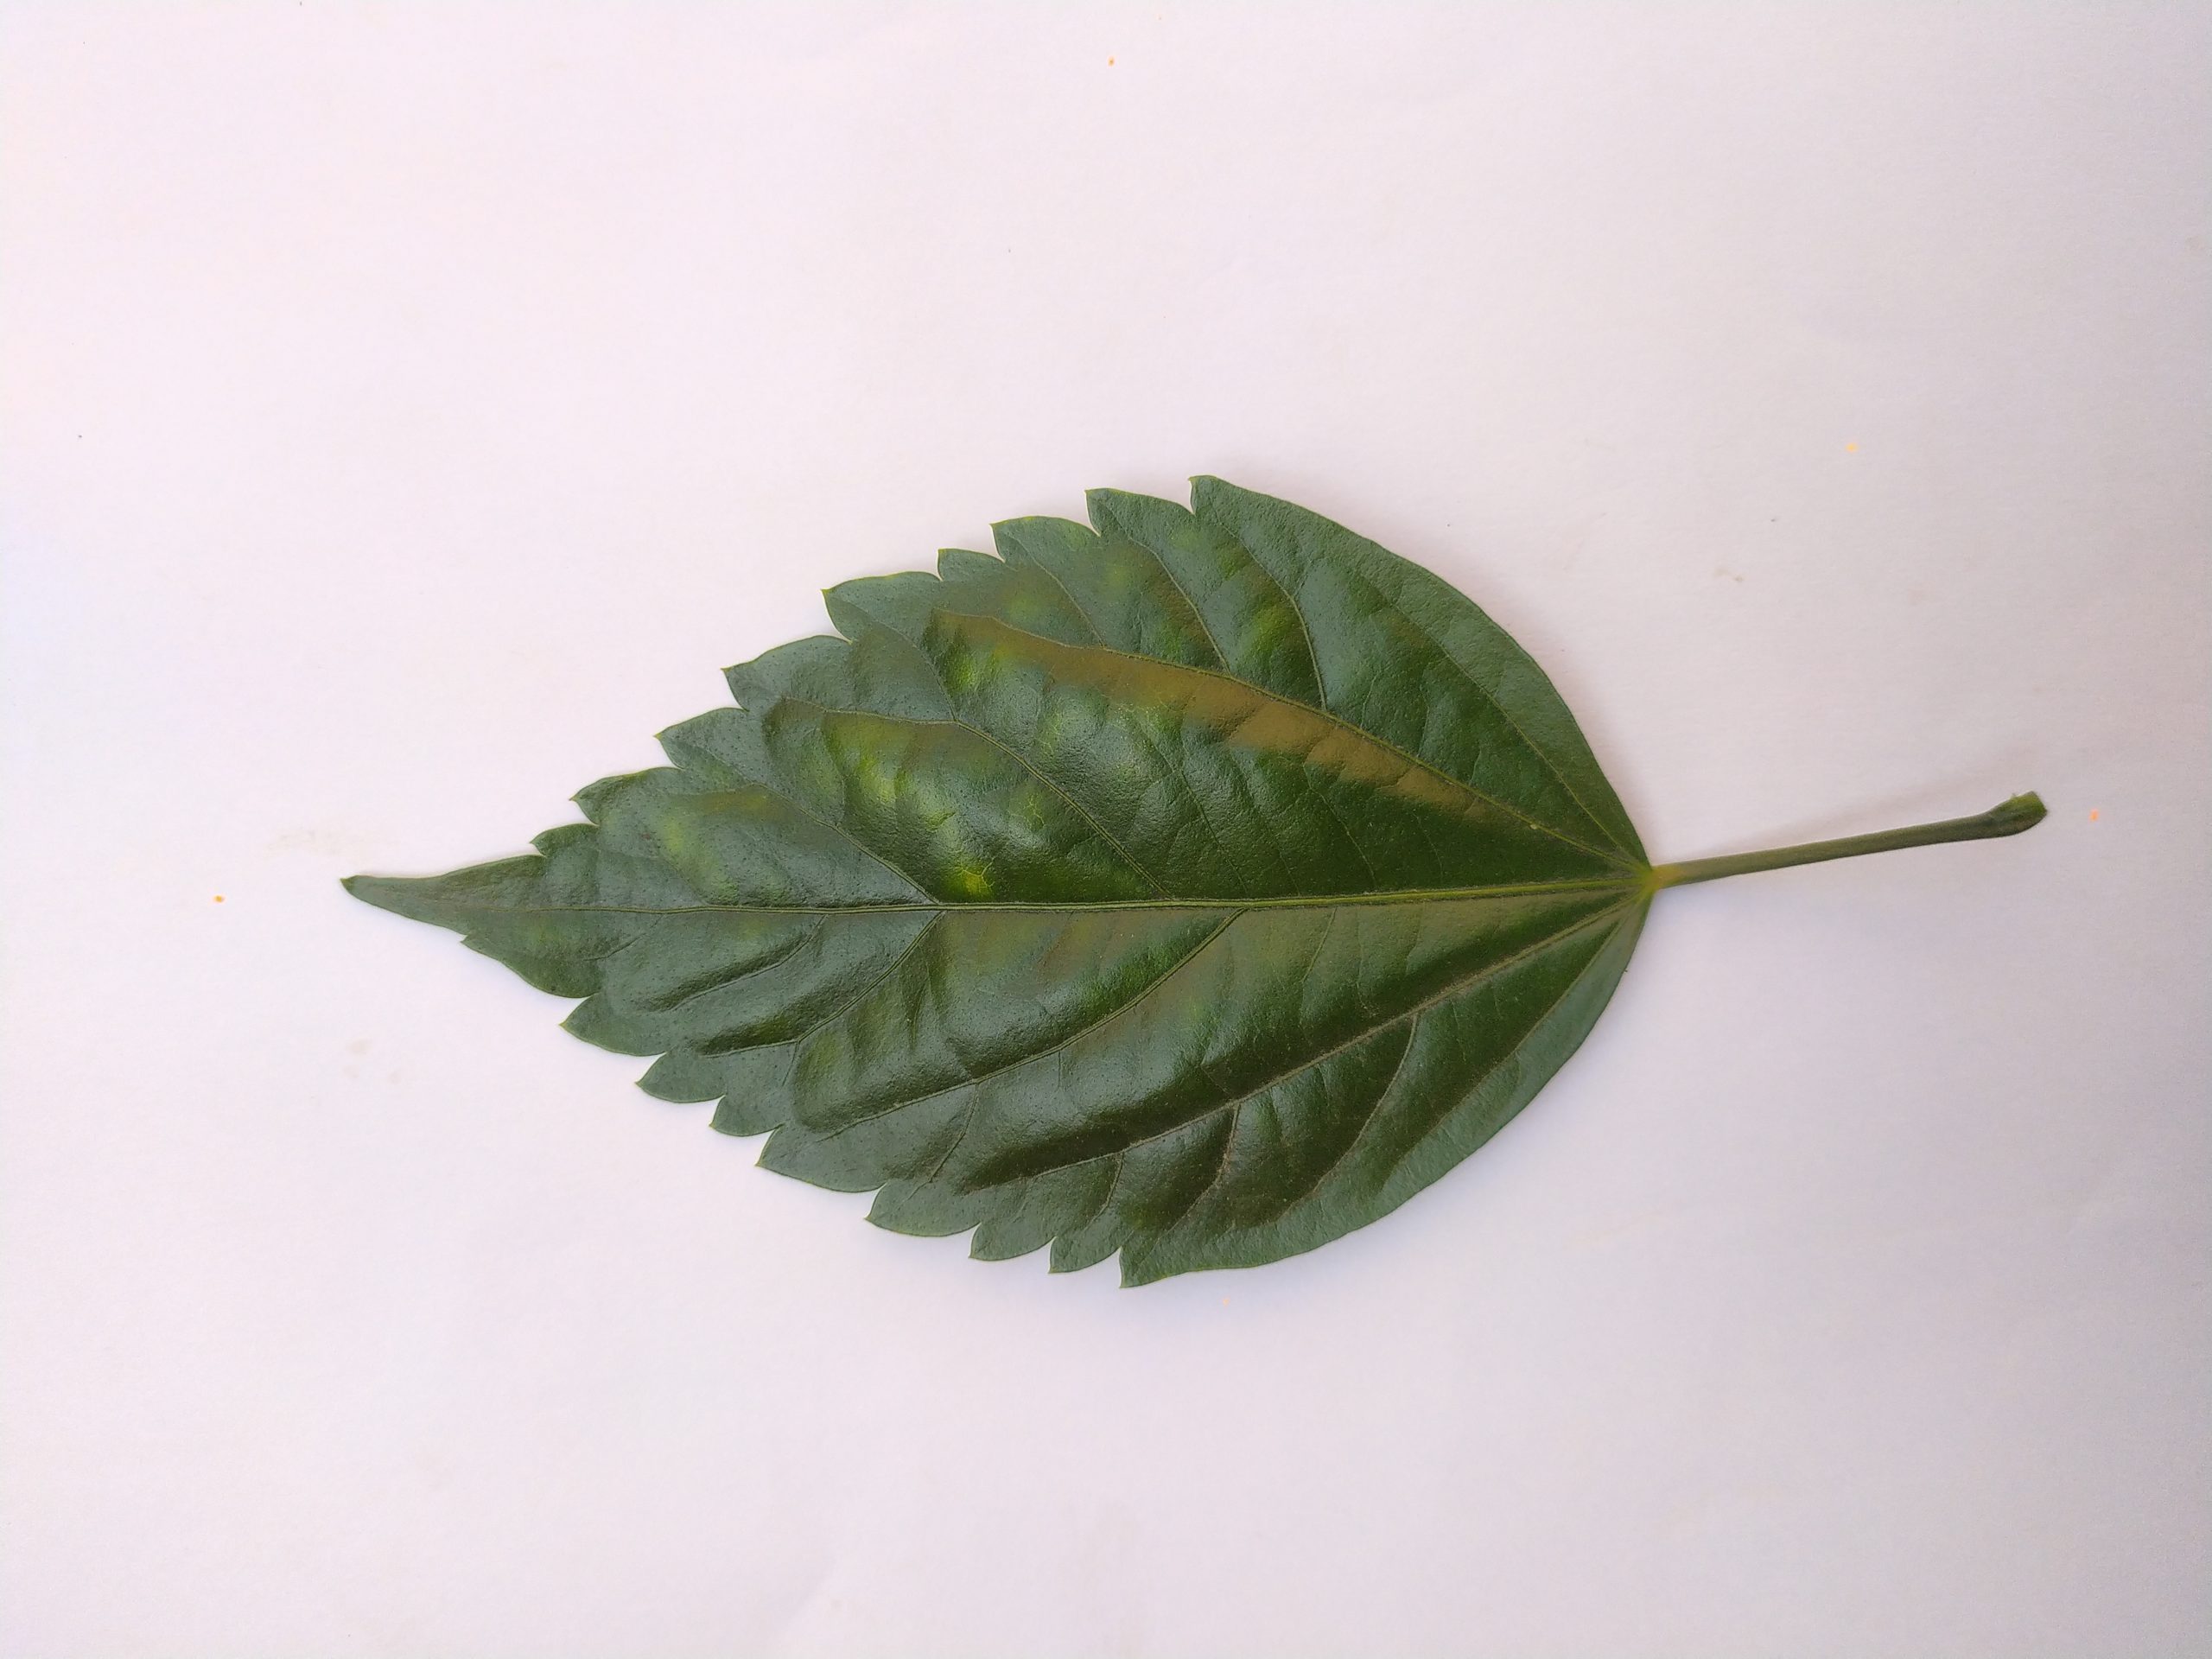 A hibiscus leaf